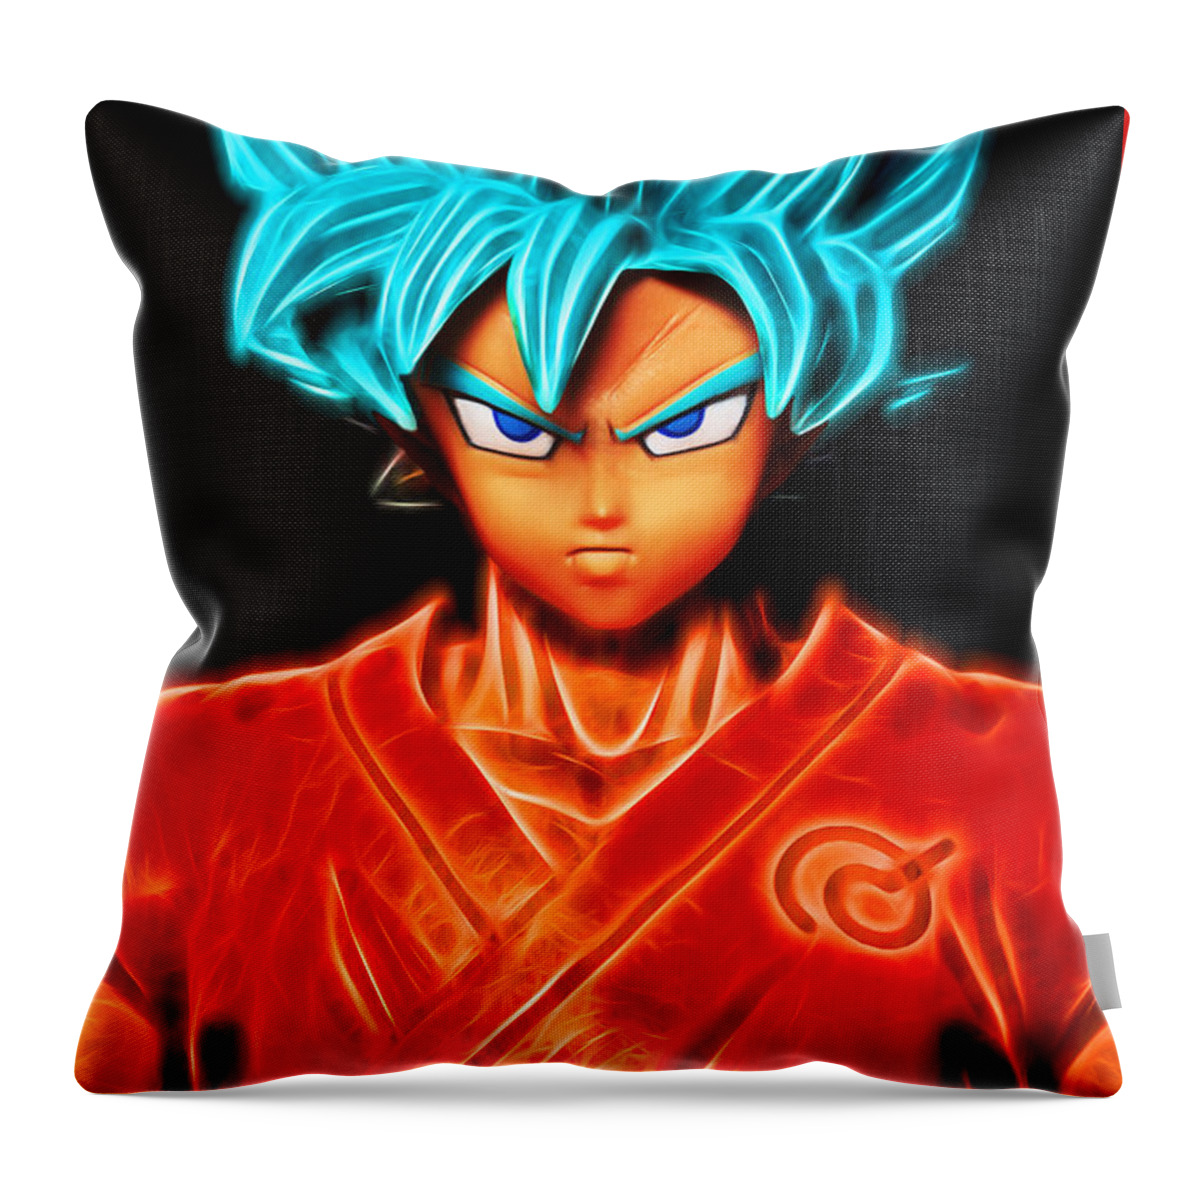 Collectables Throw Pillow featuring the digital art Super Saiyan God Goku by Ray Shiu